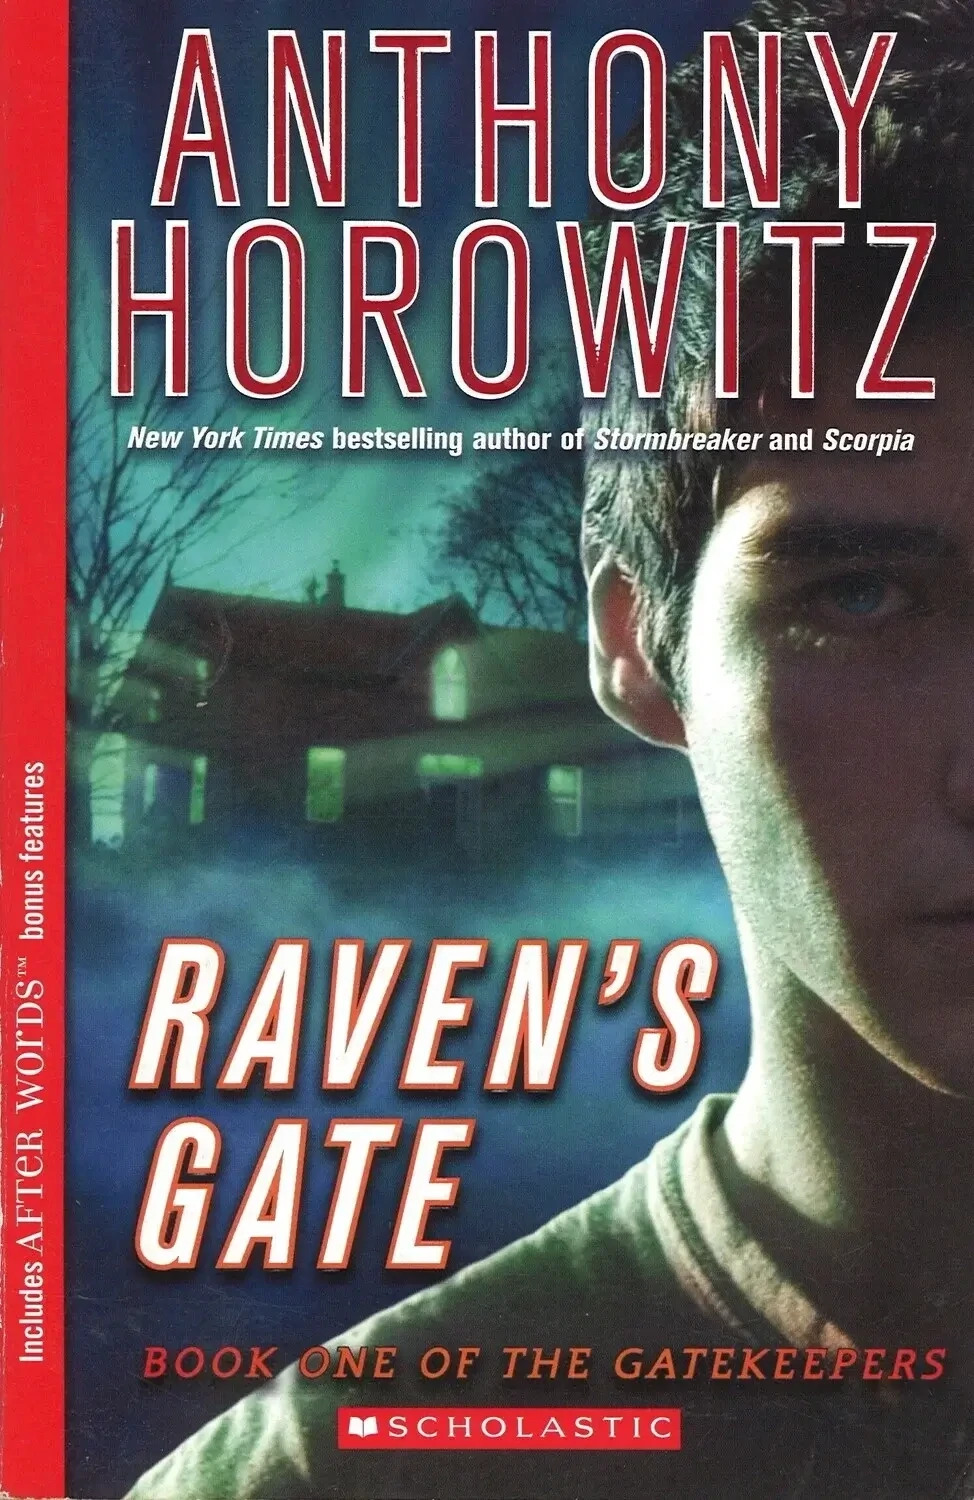 Raven's Gate (The Gatekeeper, 1) by Anthony Horowitz